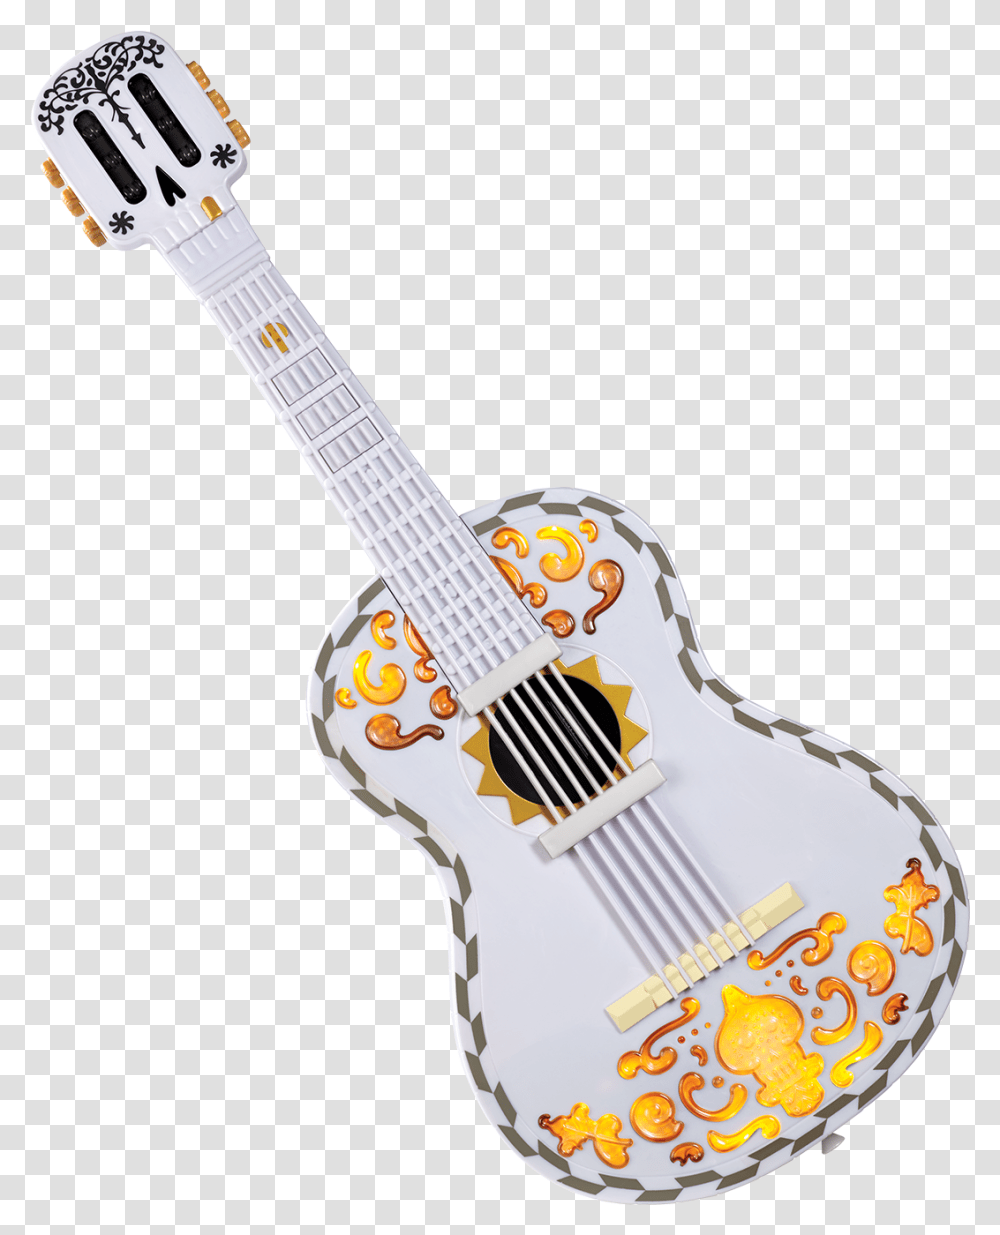 Guitarra De Coco Coco The Guitar, Leisure Activities, Musical Instrument, Bass Guitar, Electric Guitar Transparent Png